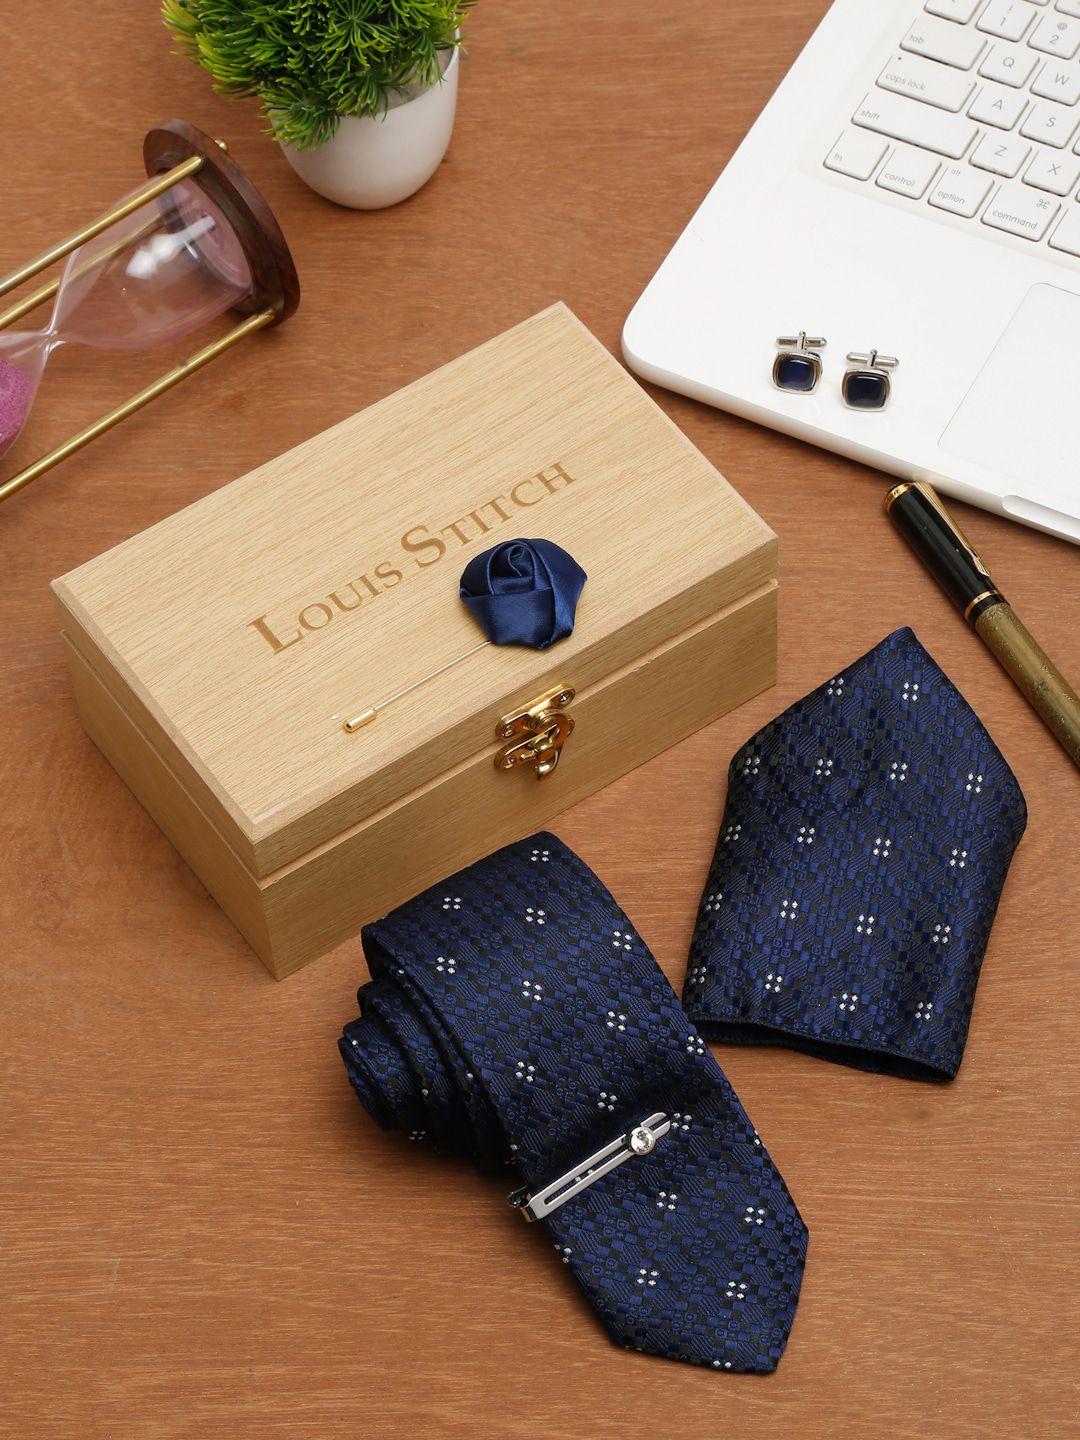 louis stitch men tie cufflinks pocket square accessory gift set